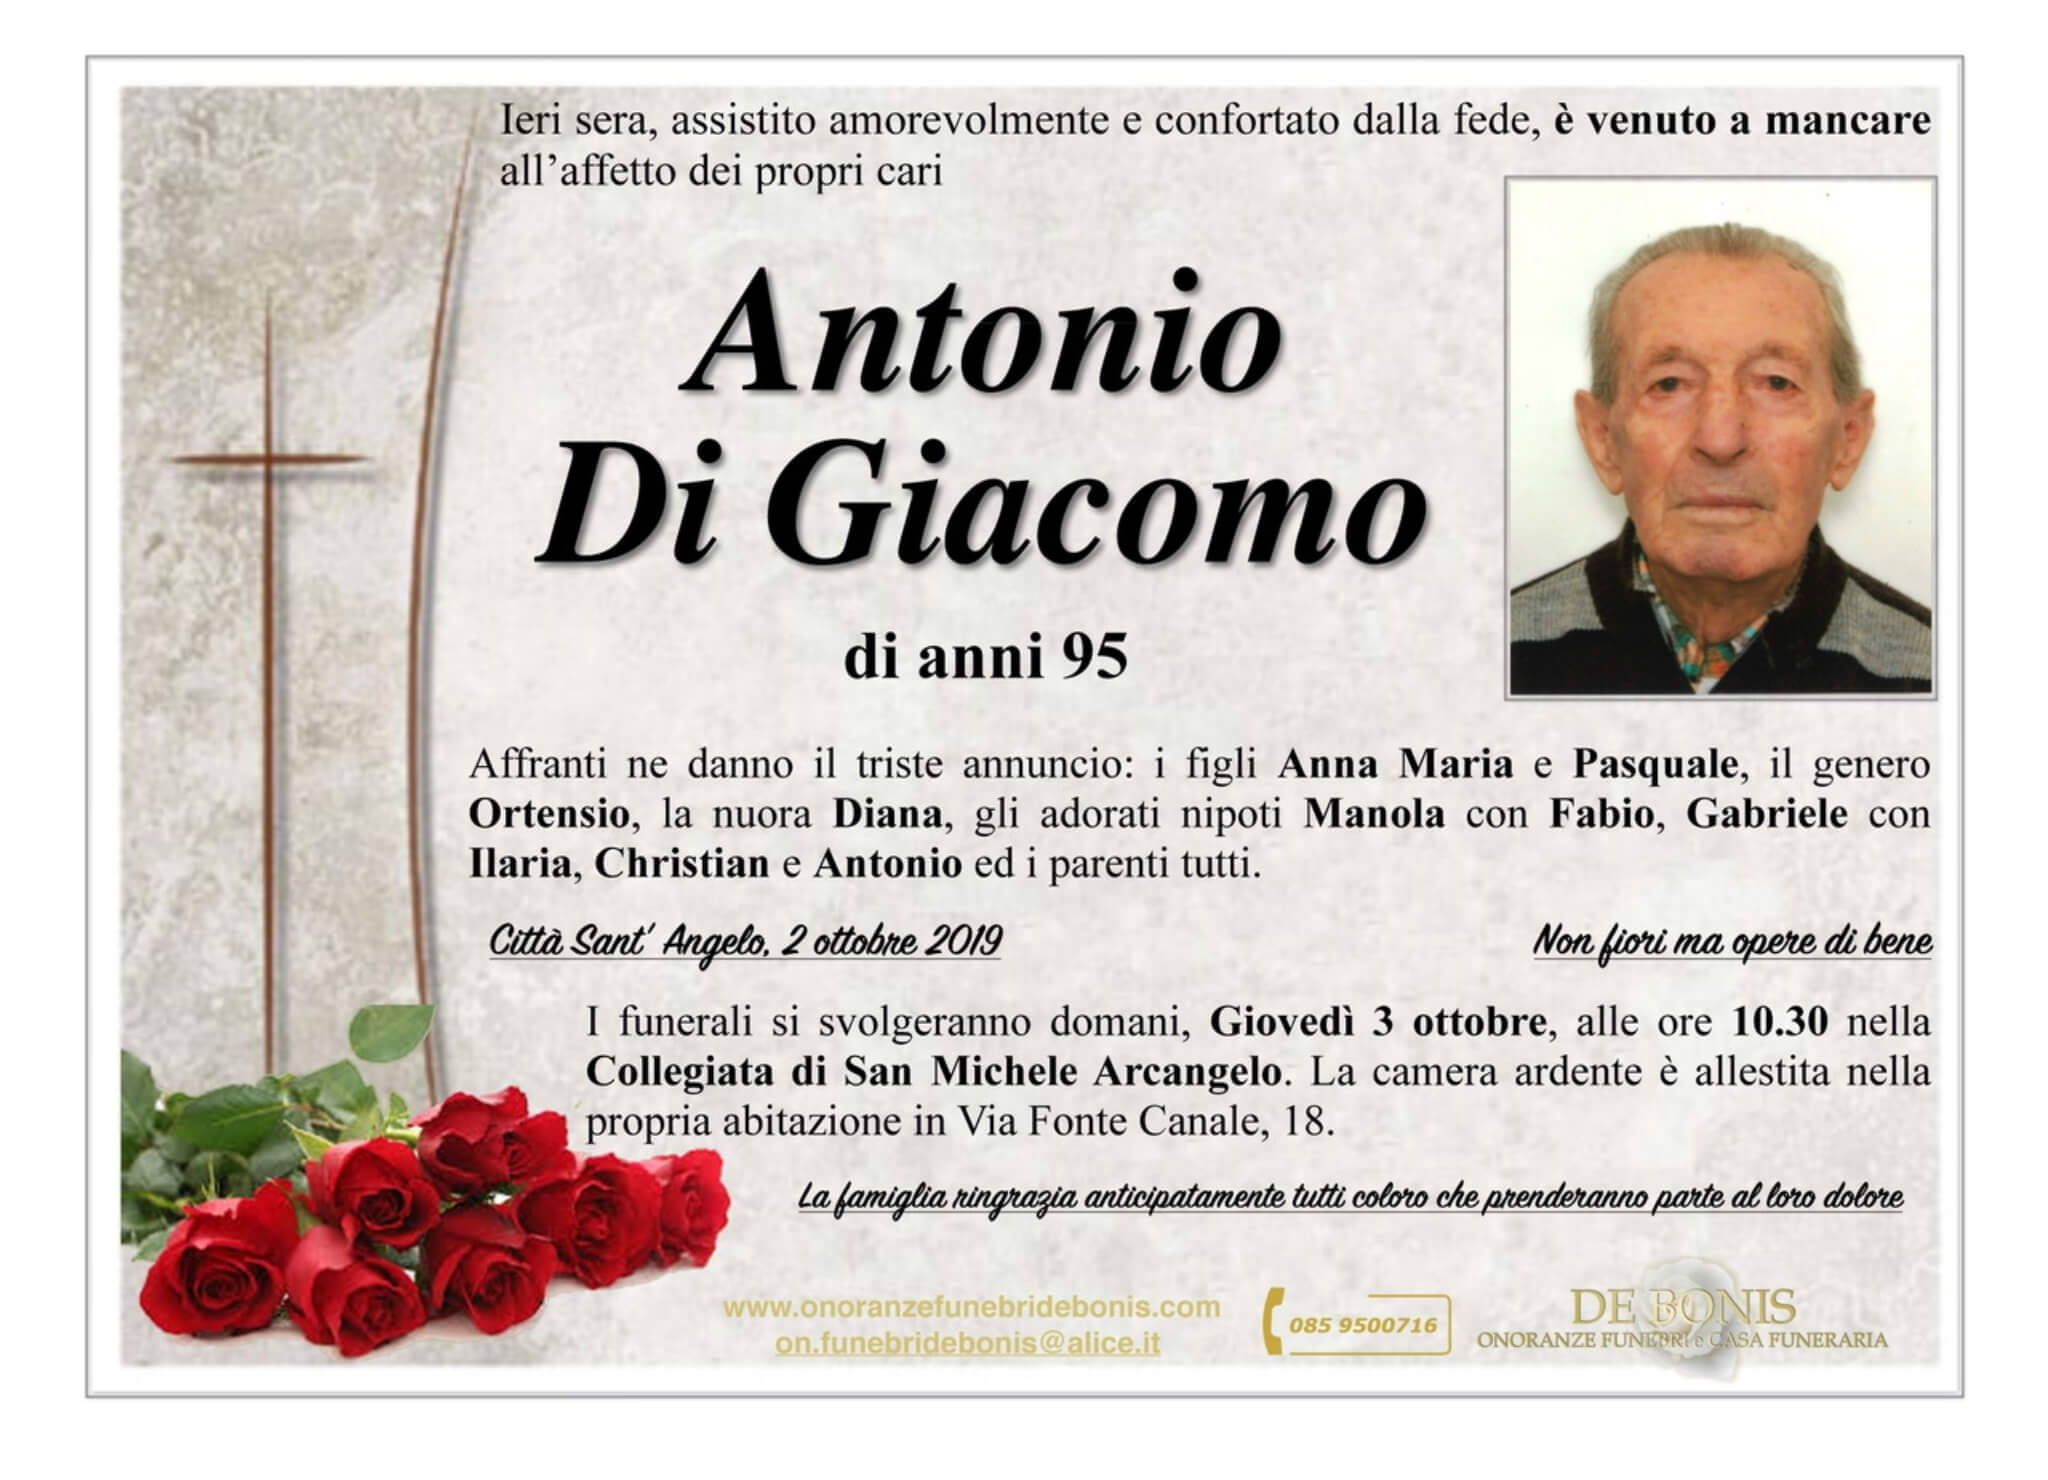 Antonio Di Giacomo